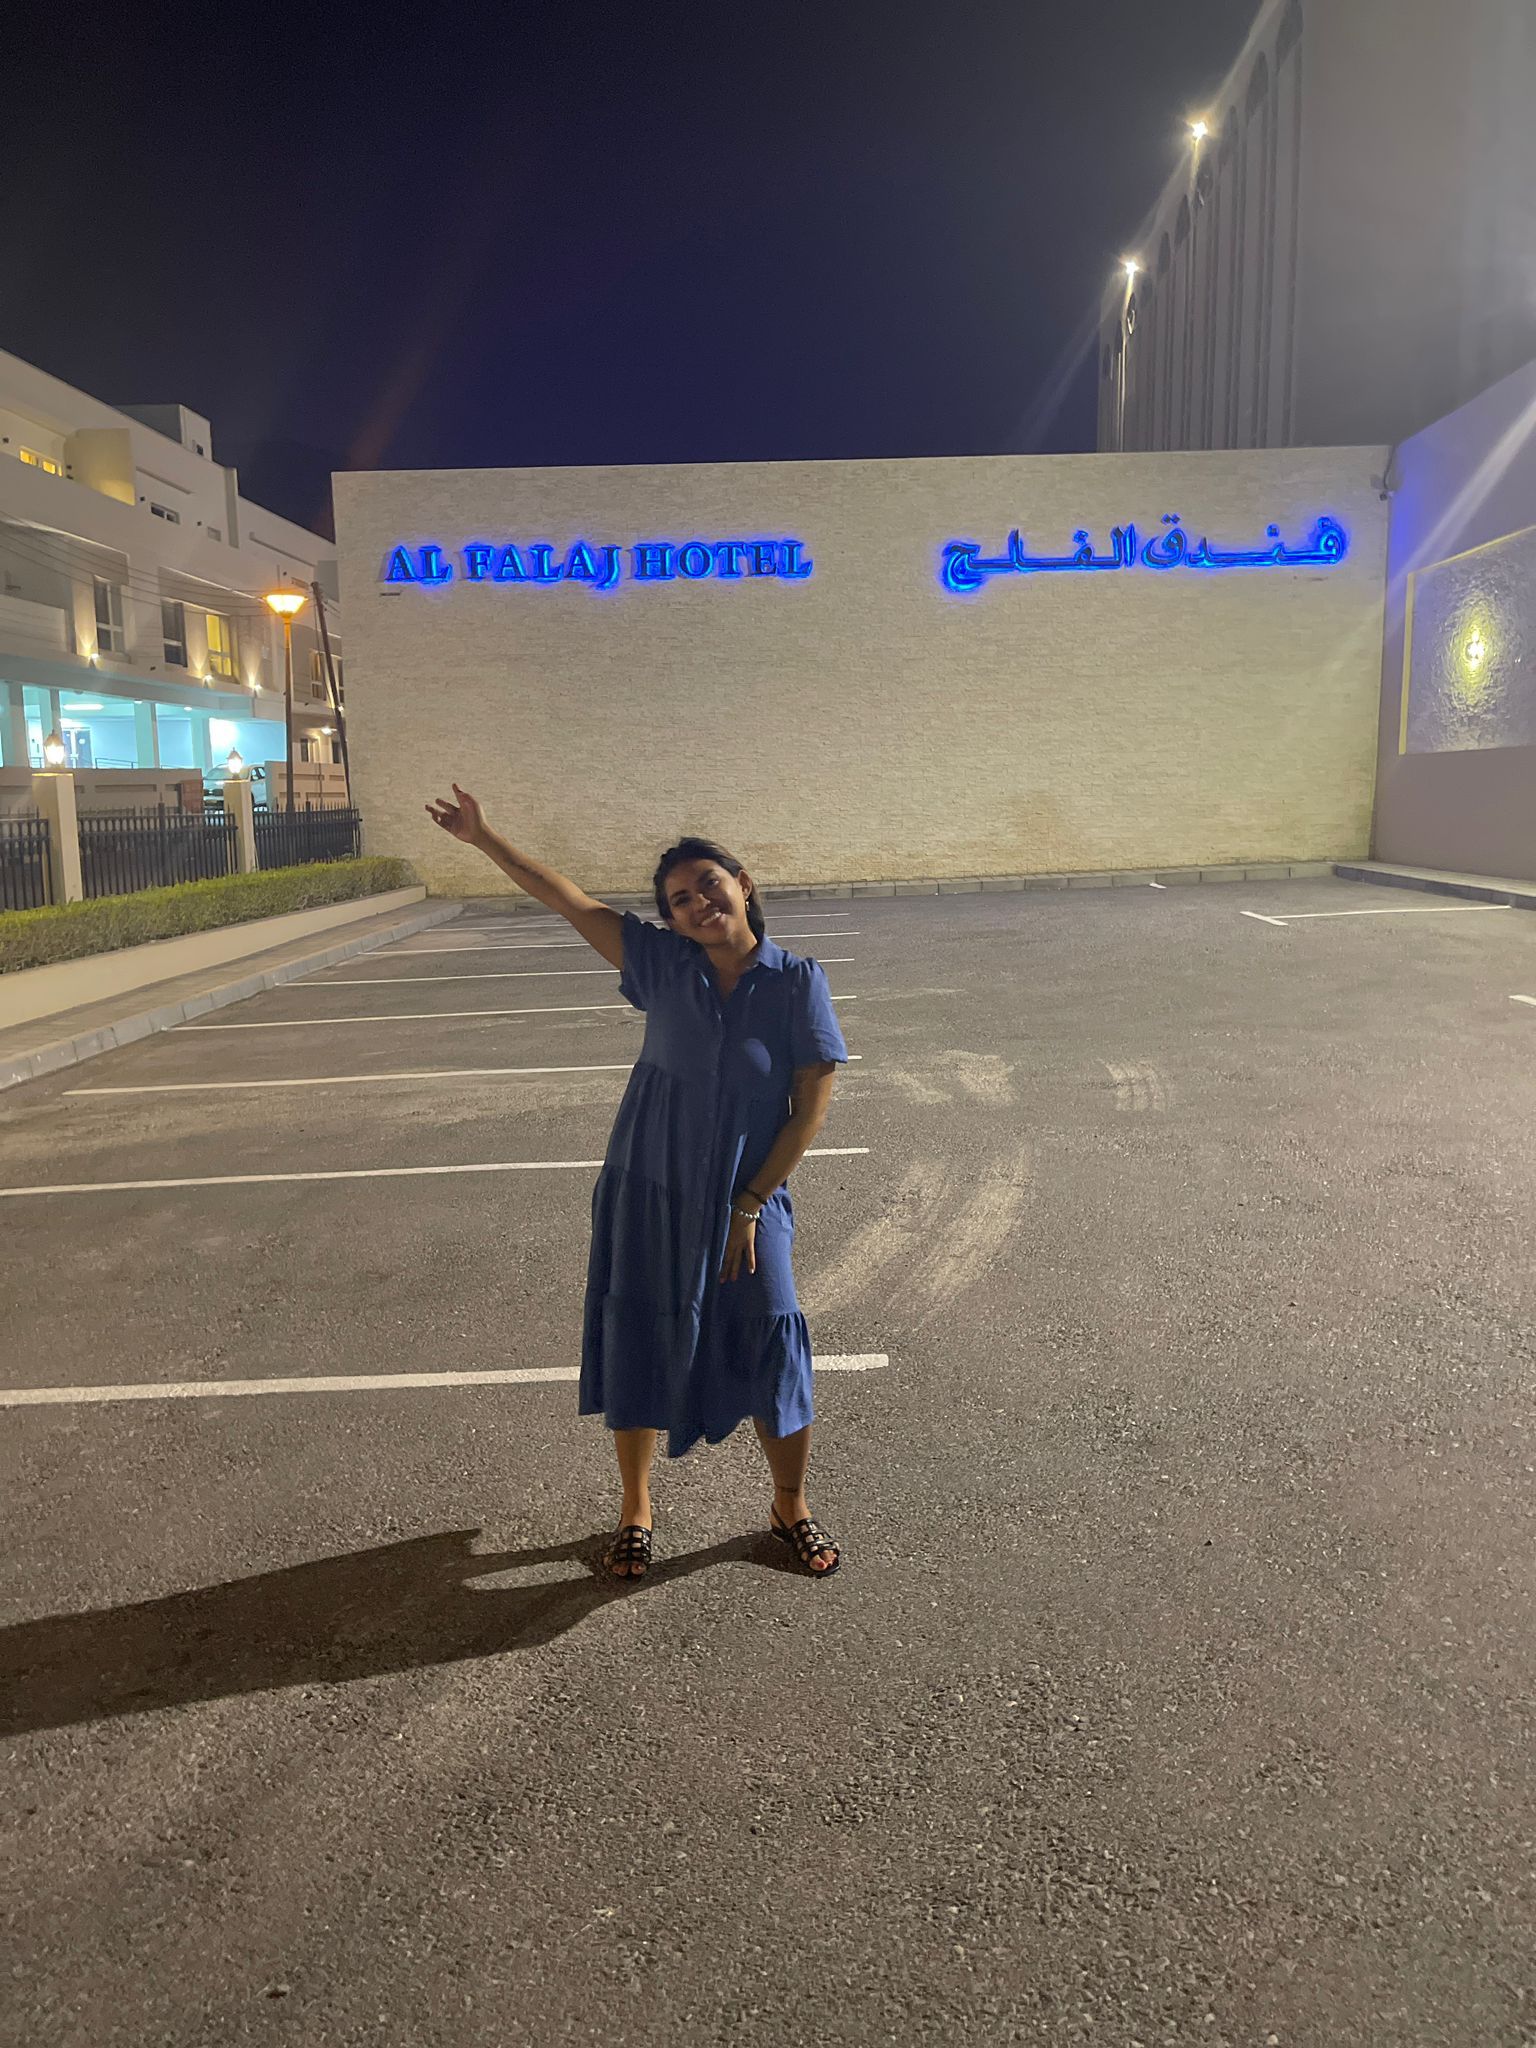 Al Falaj Hotel Where you should stay in Muscat, Oman